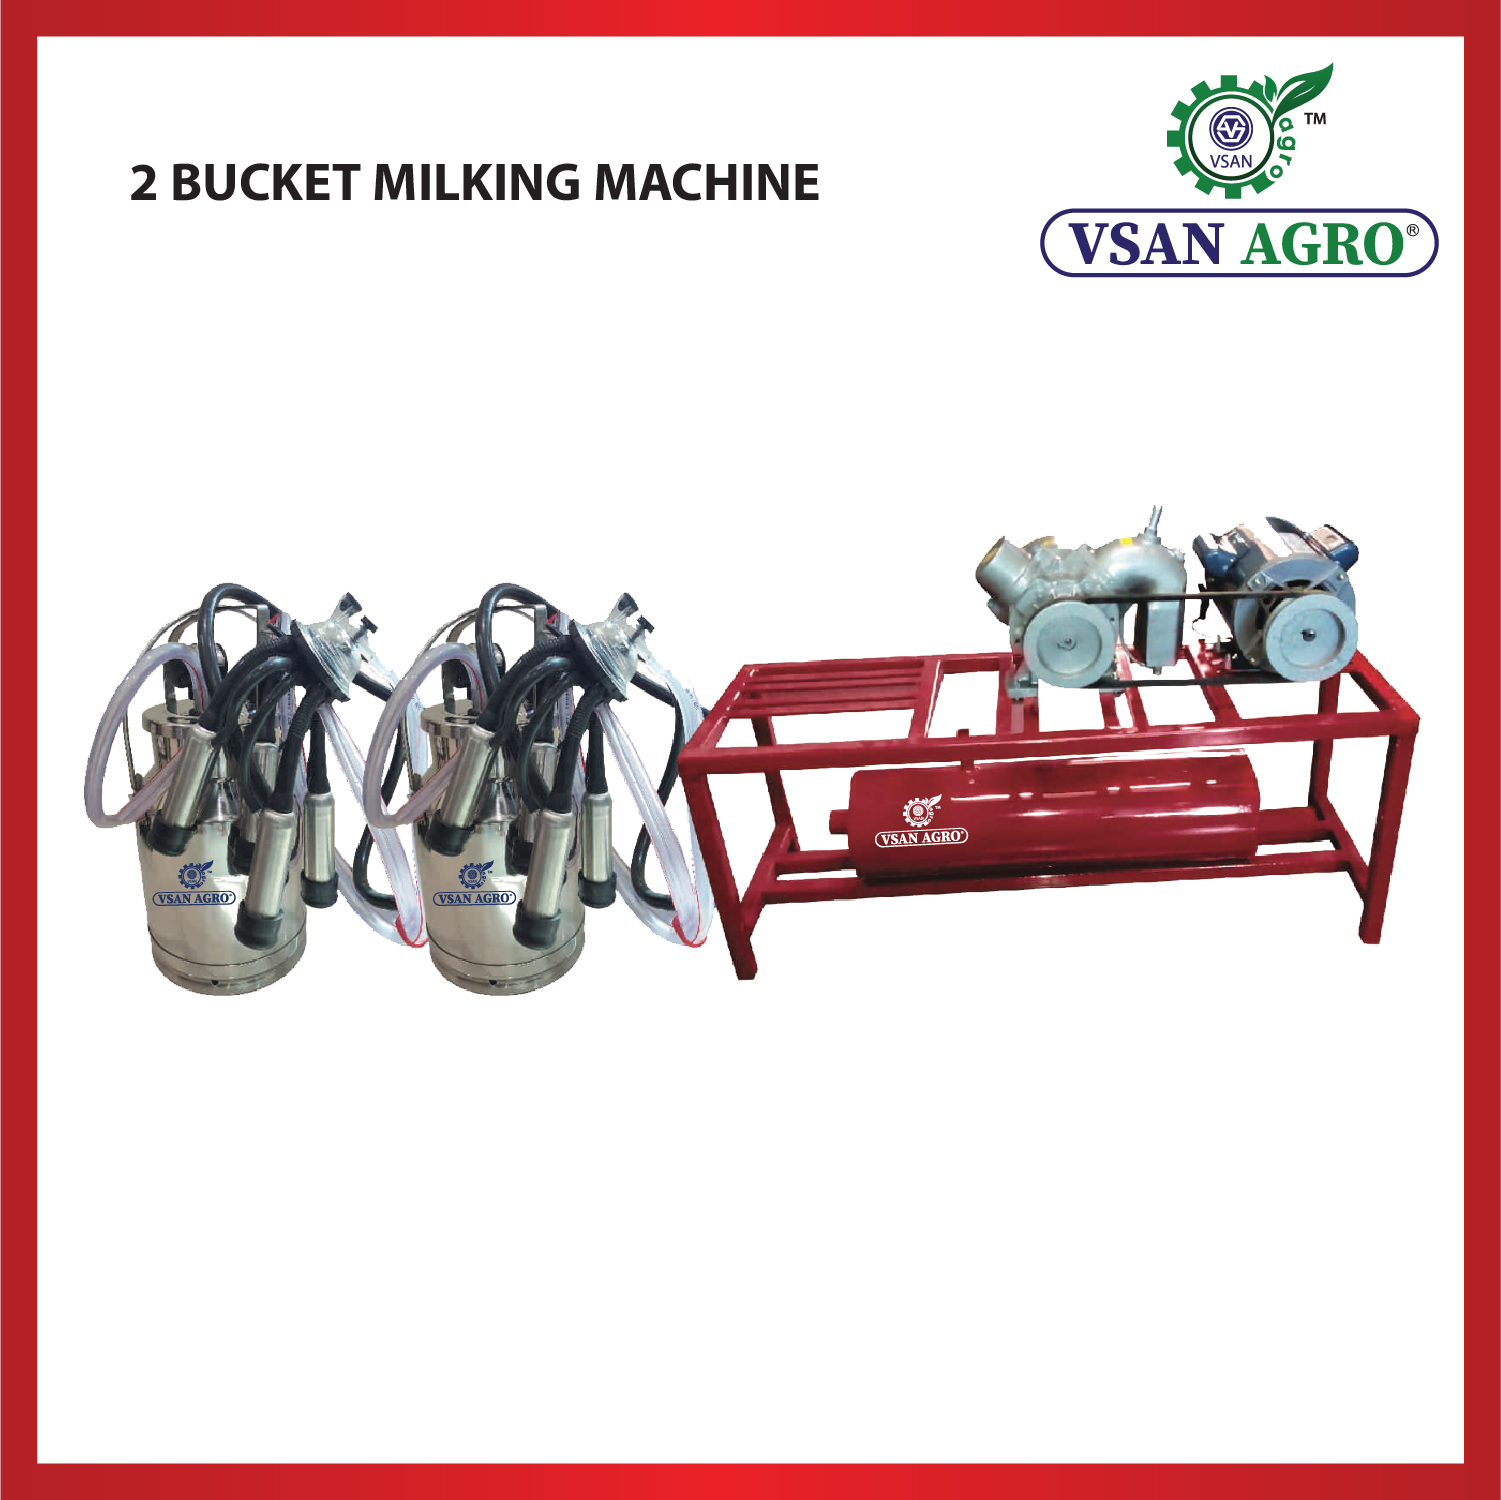 2 Bucket Milking Machine